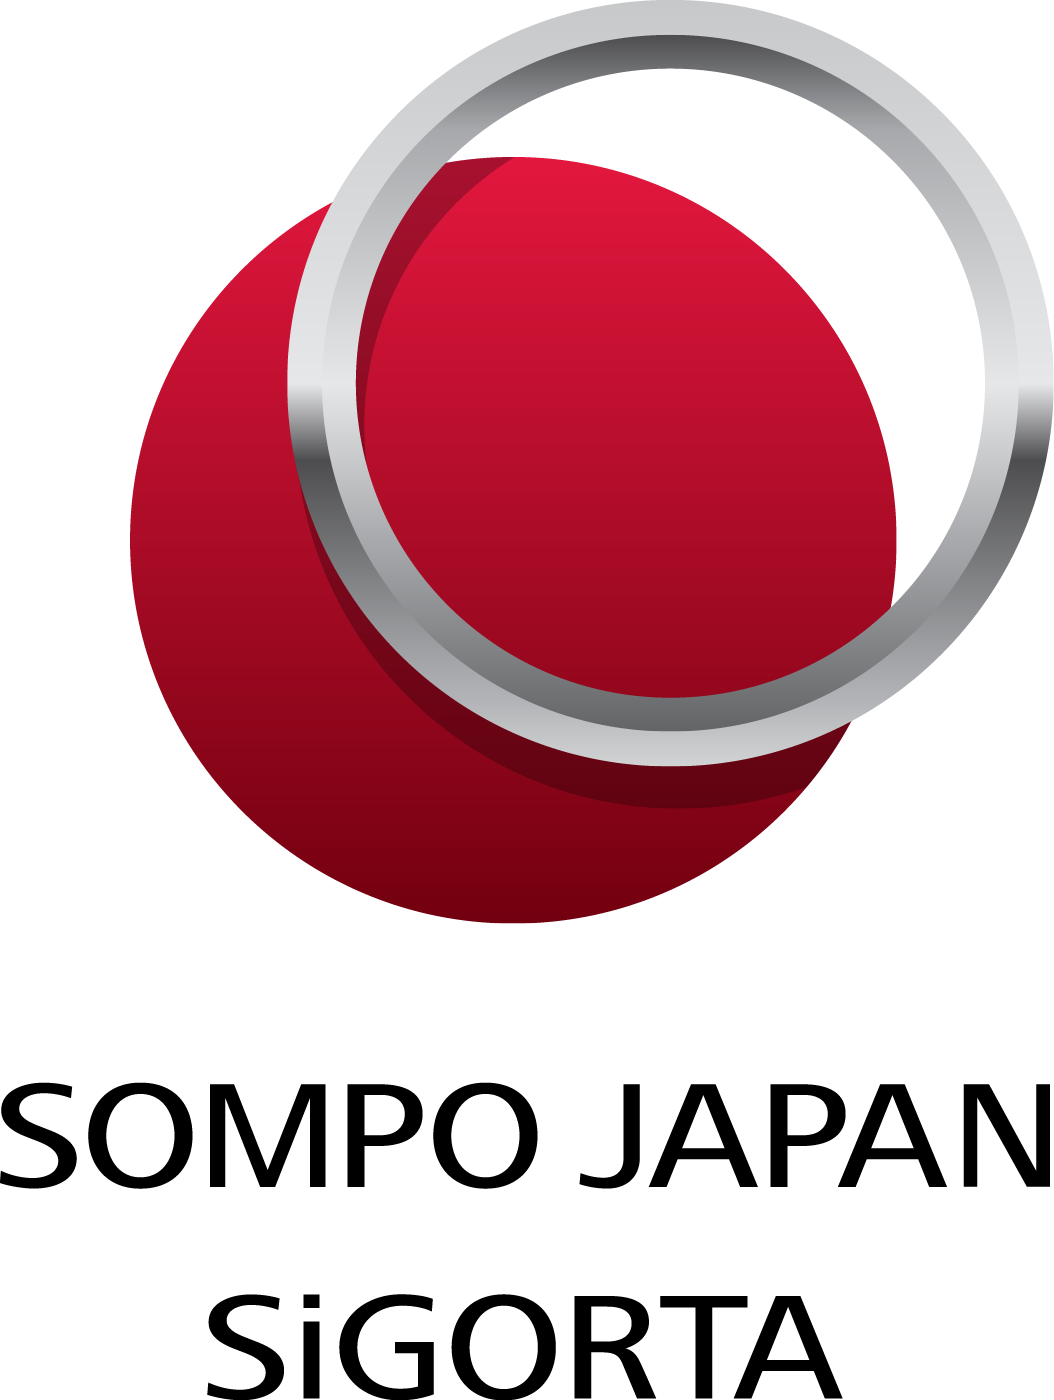 Sompo Japan Nipponkoa Logo Clipart - Large Size Png Image - PikPng